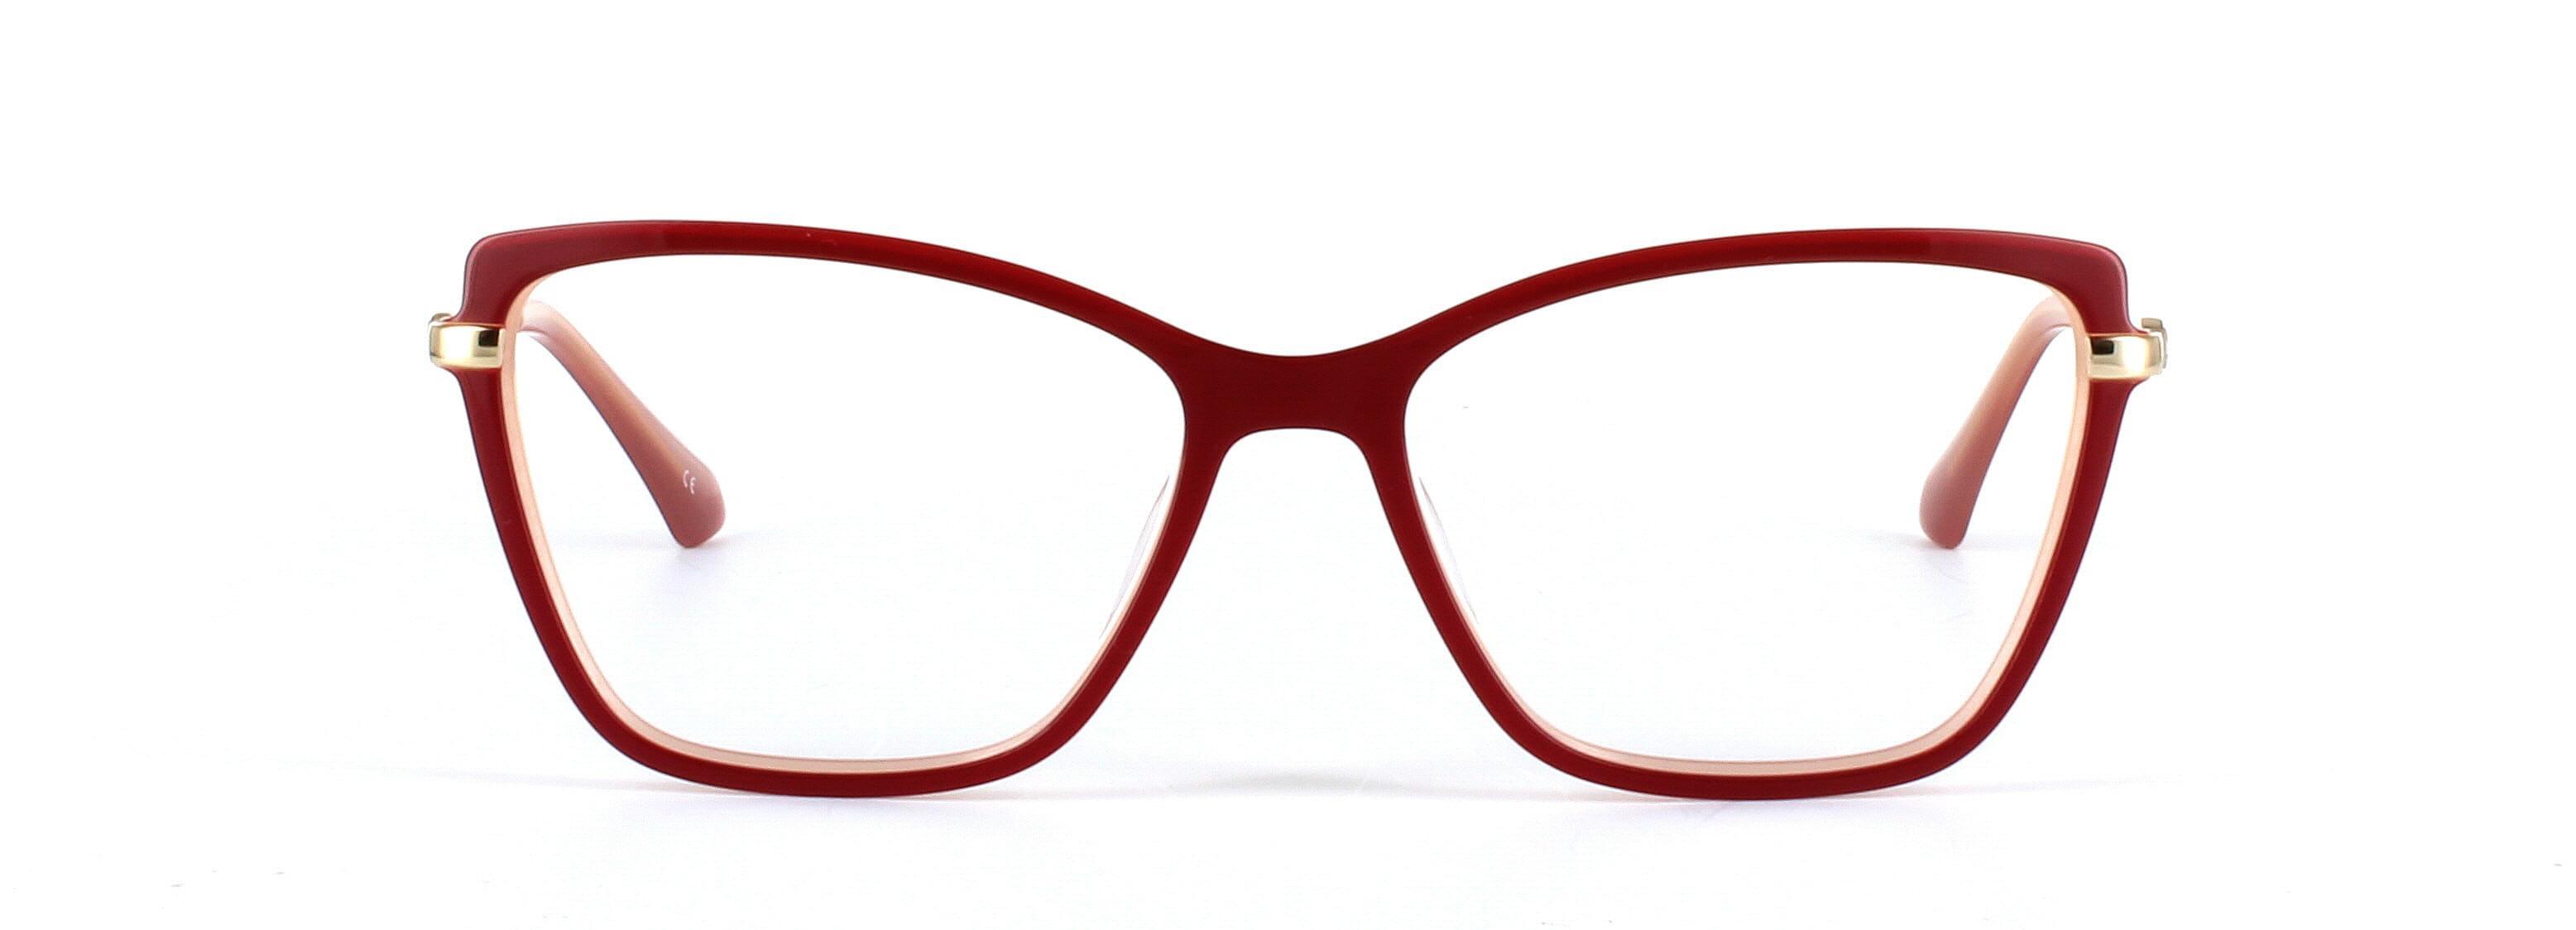 Jeanine Red Full Rim Acetate Glasses - Image View 5